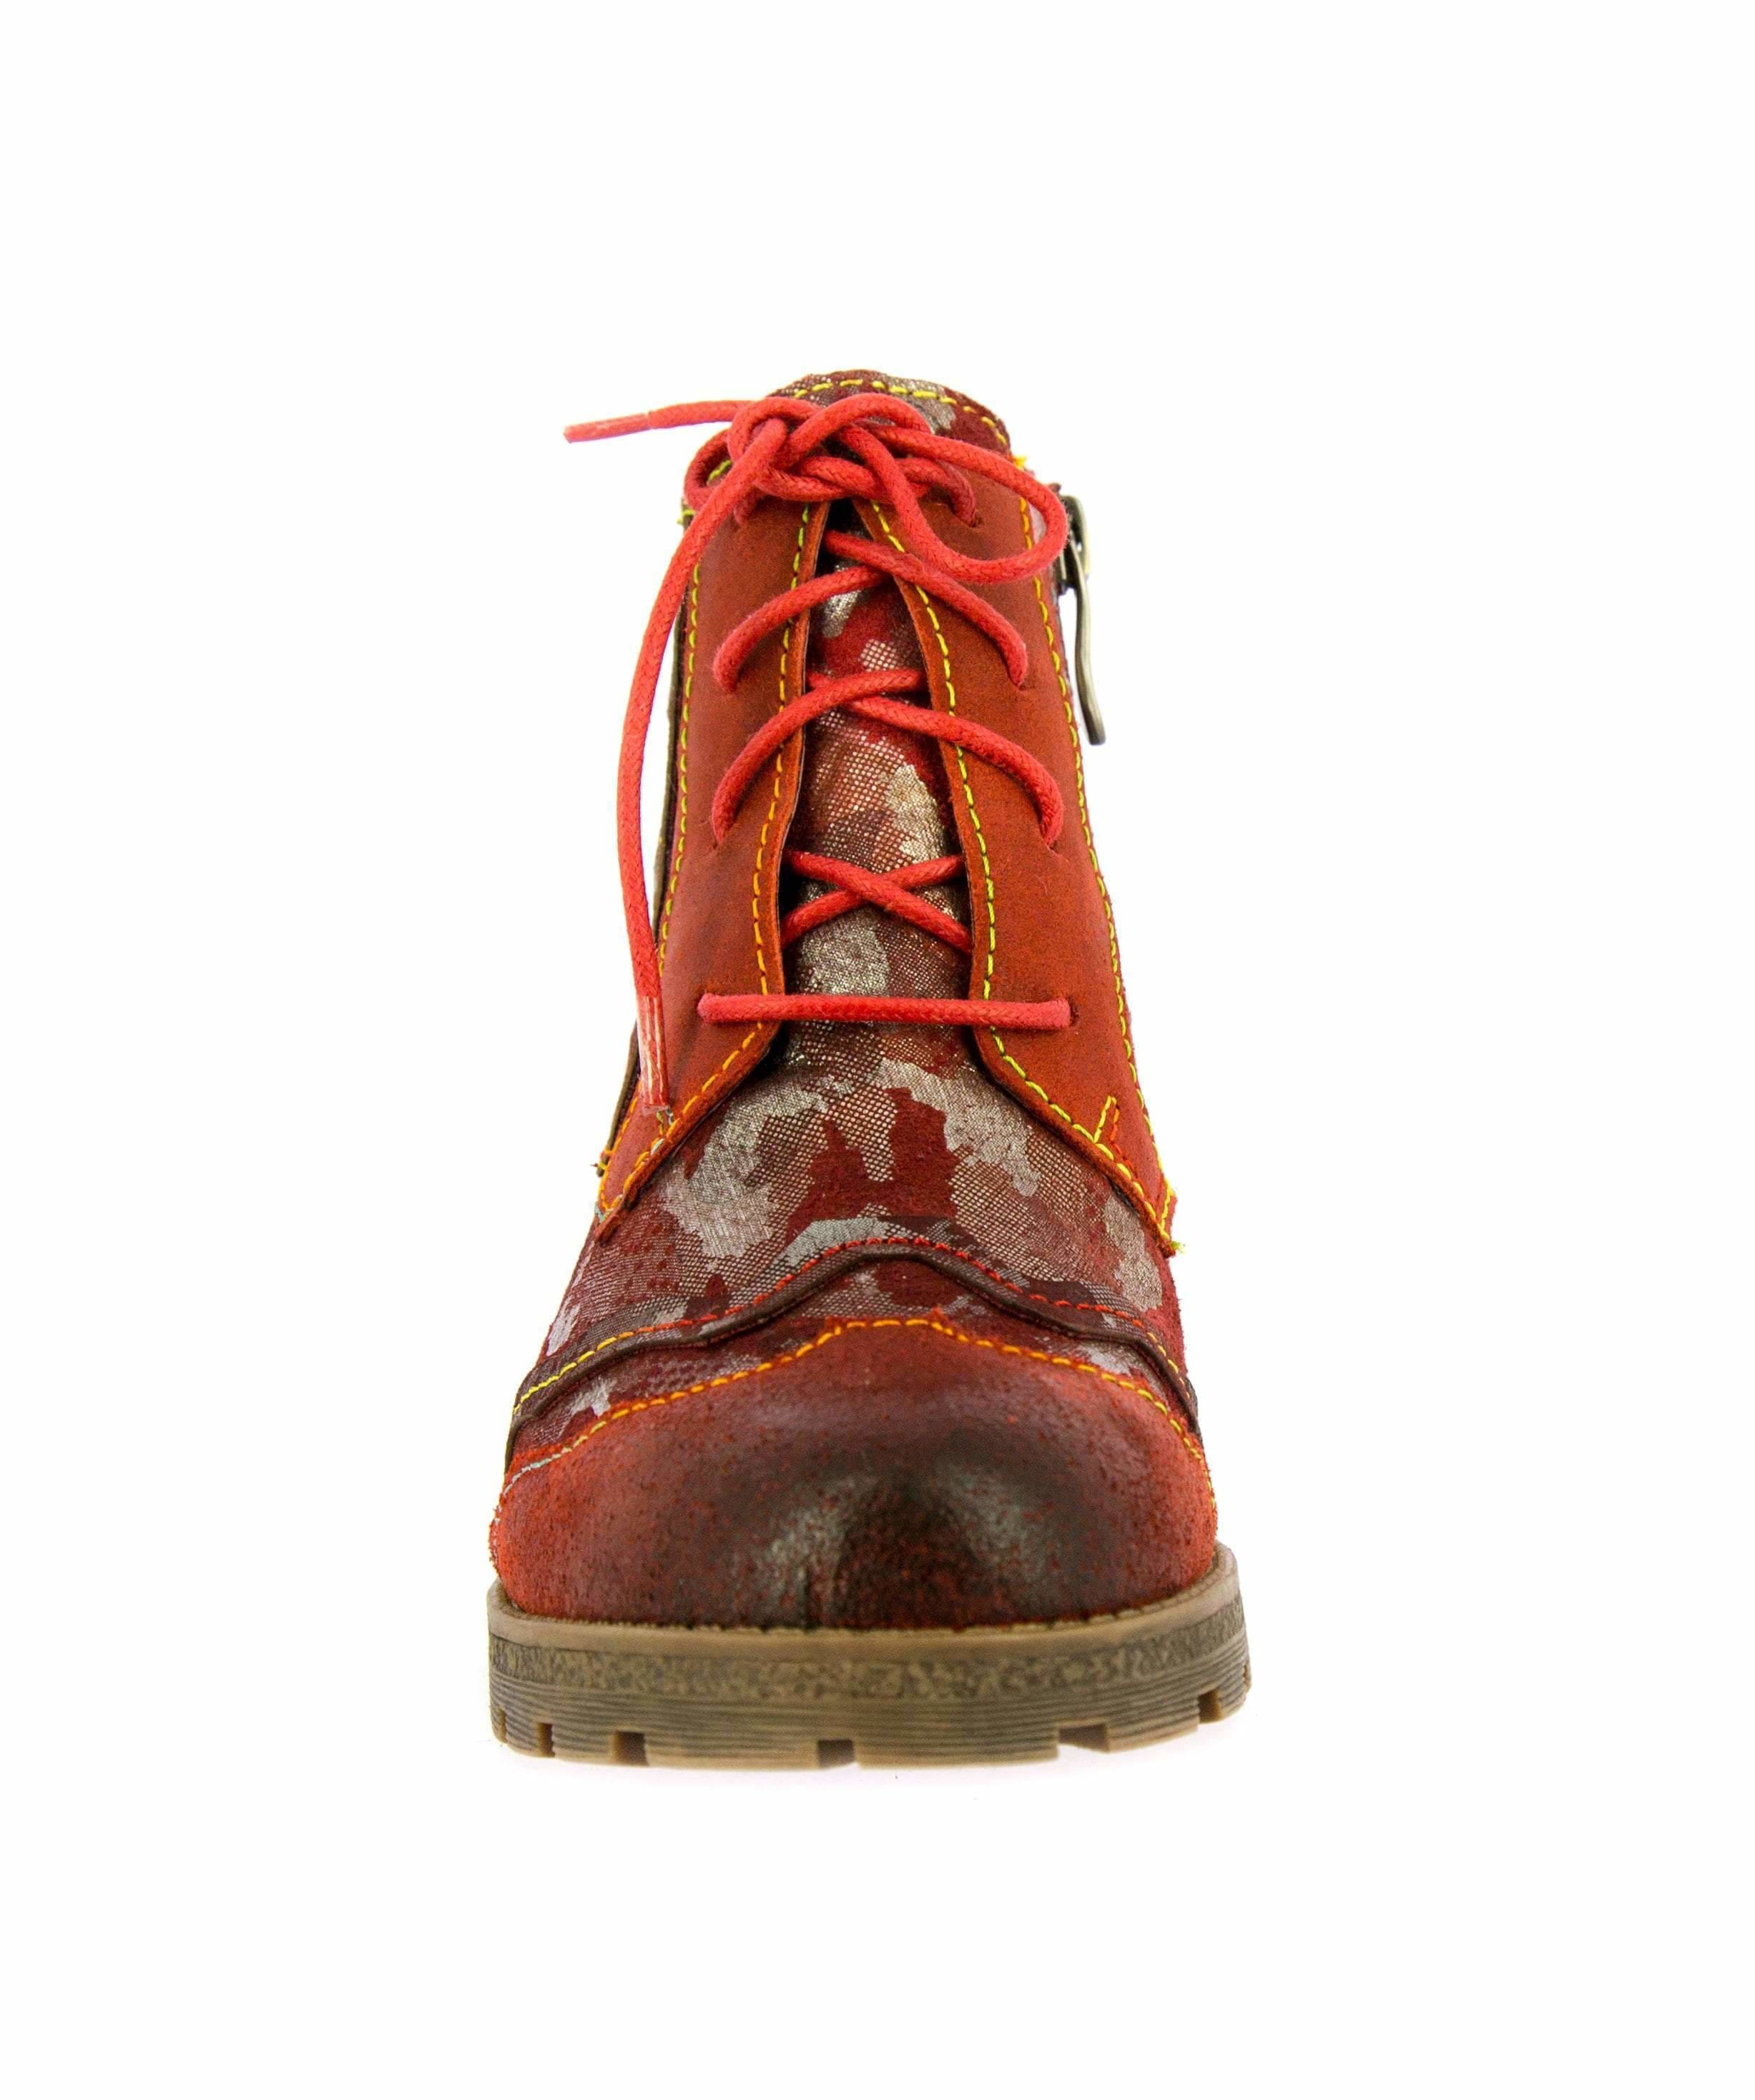 Zapato CORAIL 068 - Bota